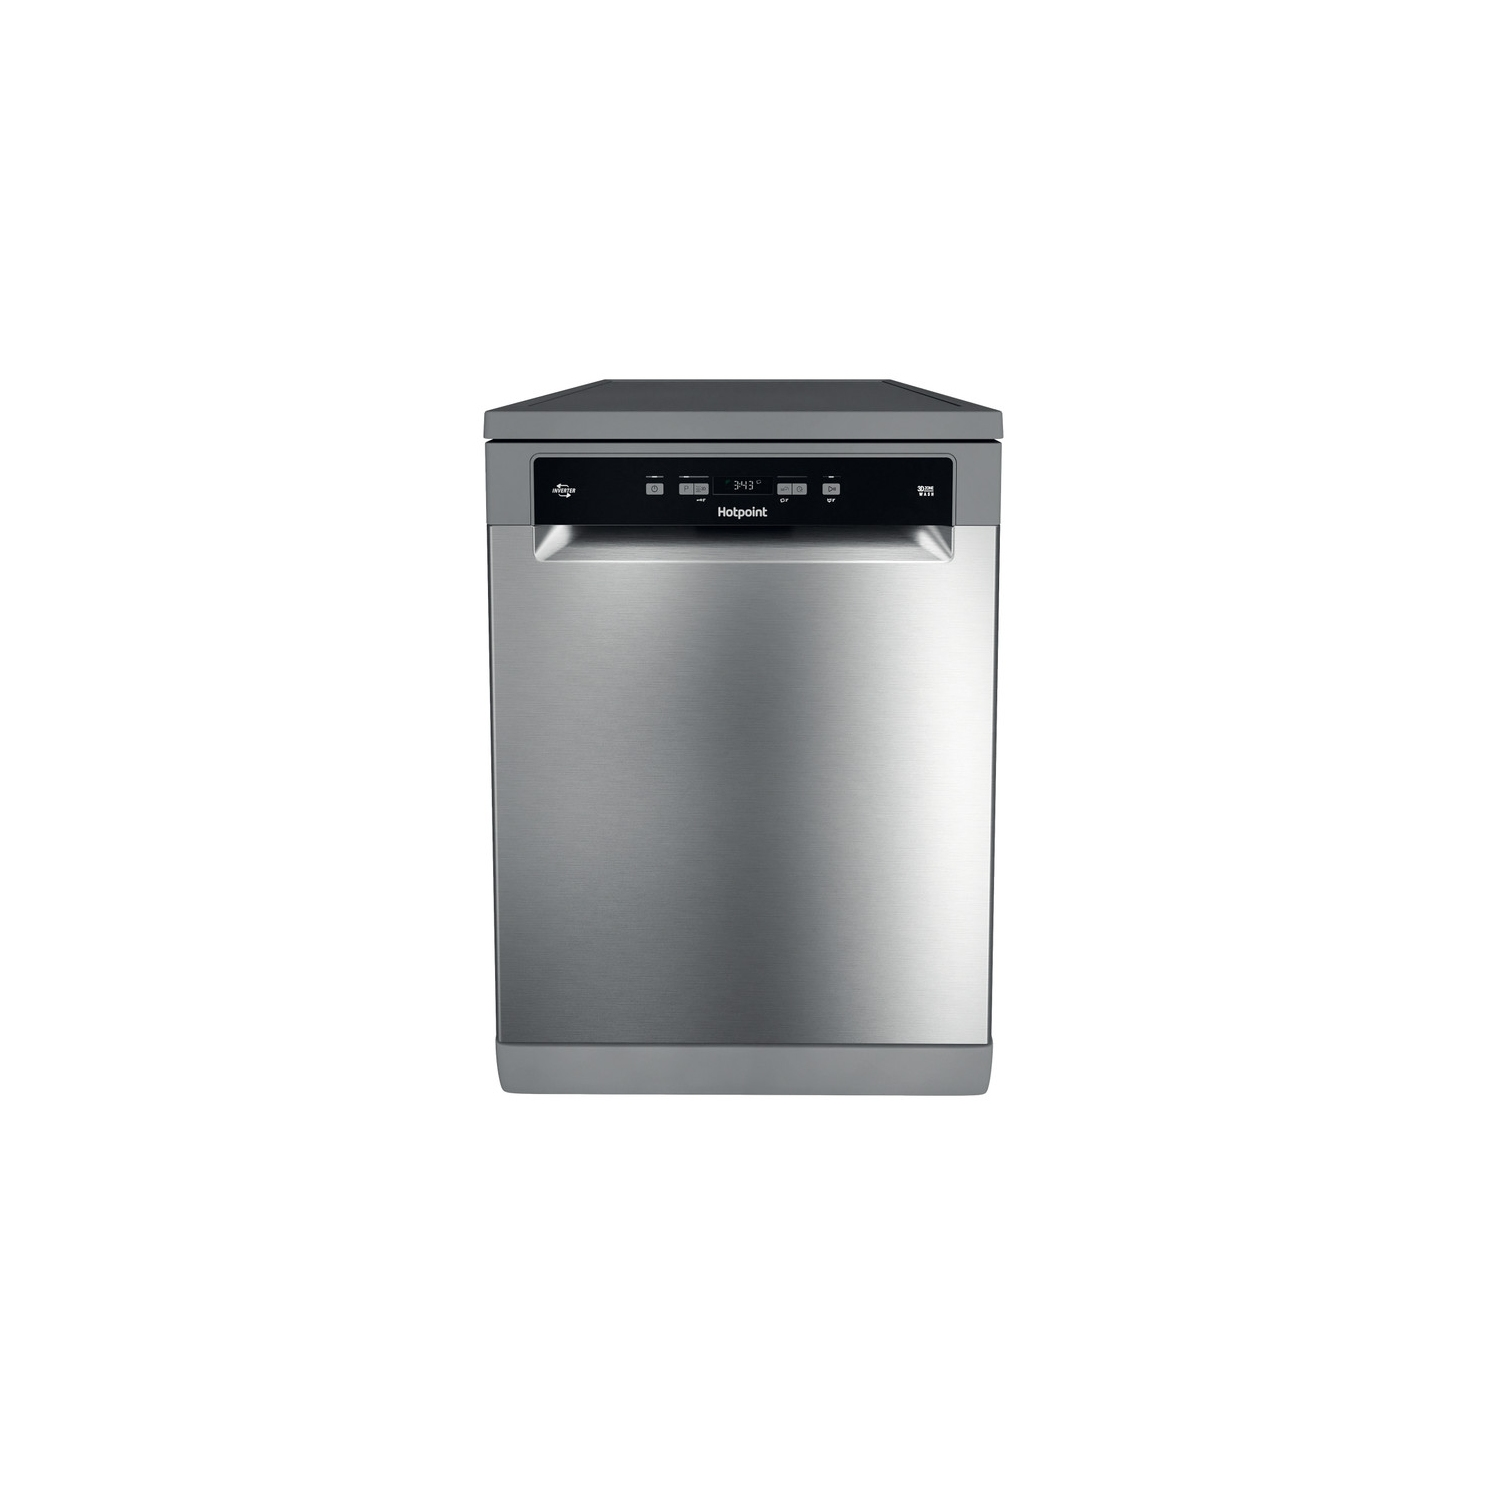 Hotpoint 14 Place Freestanding Dishwasher, Silver - HFC3T232WFGXUK - 1